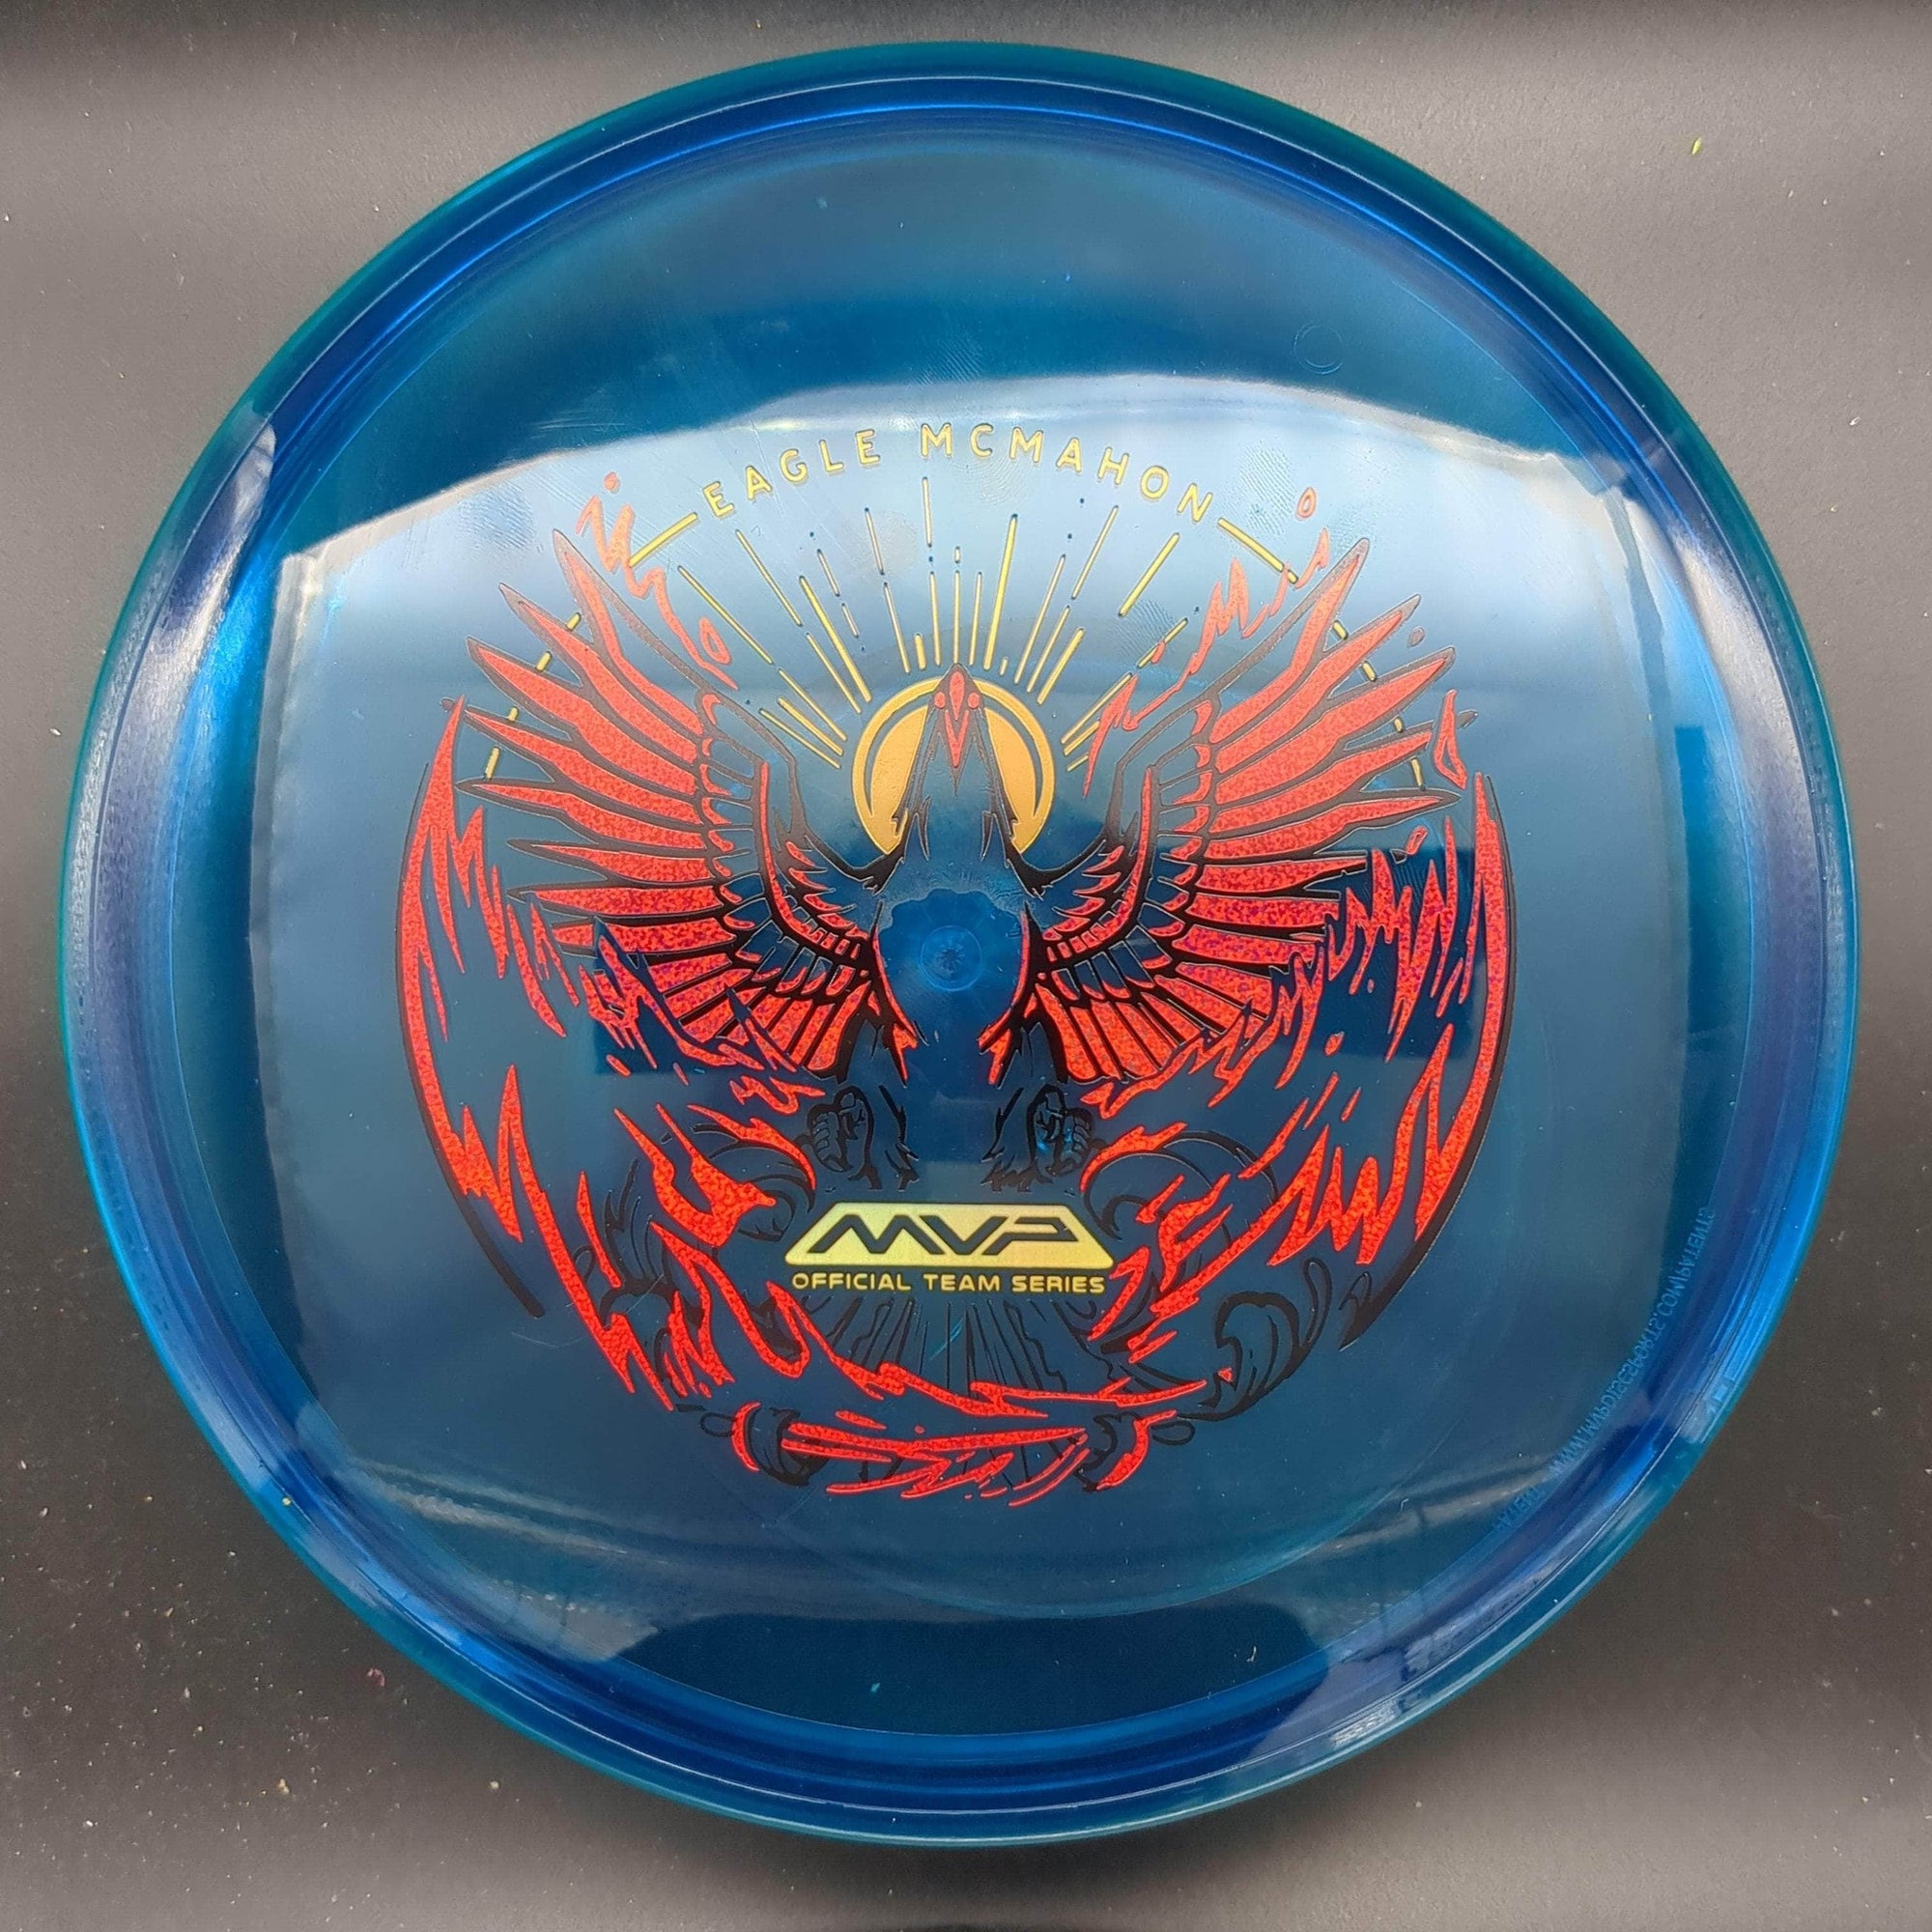 Axiom Putter Blue Rim Blue Plate 174g Envy, Prism Proton, Eagle McMahon Special Edition